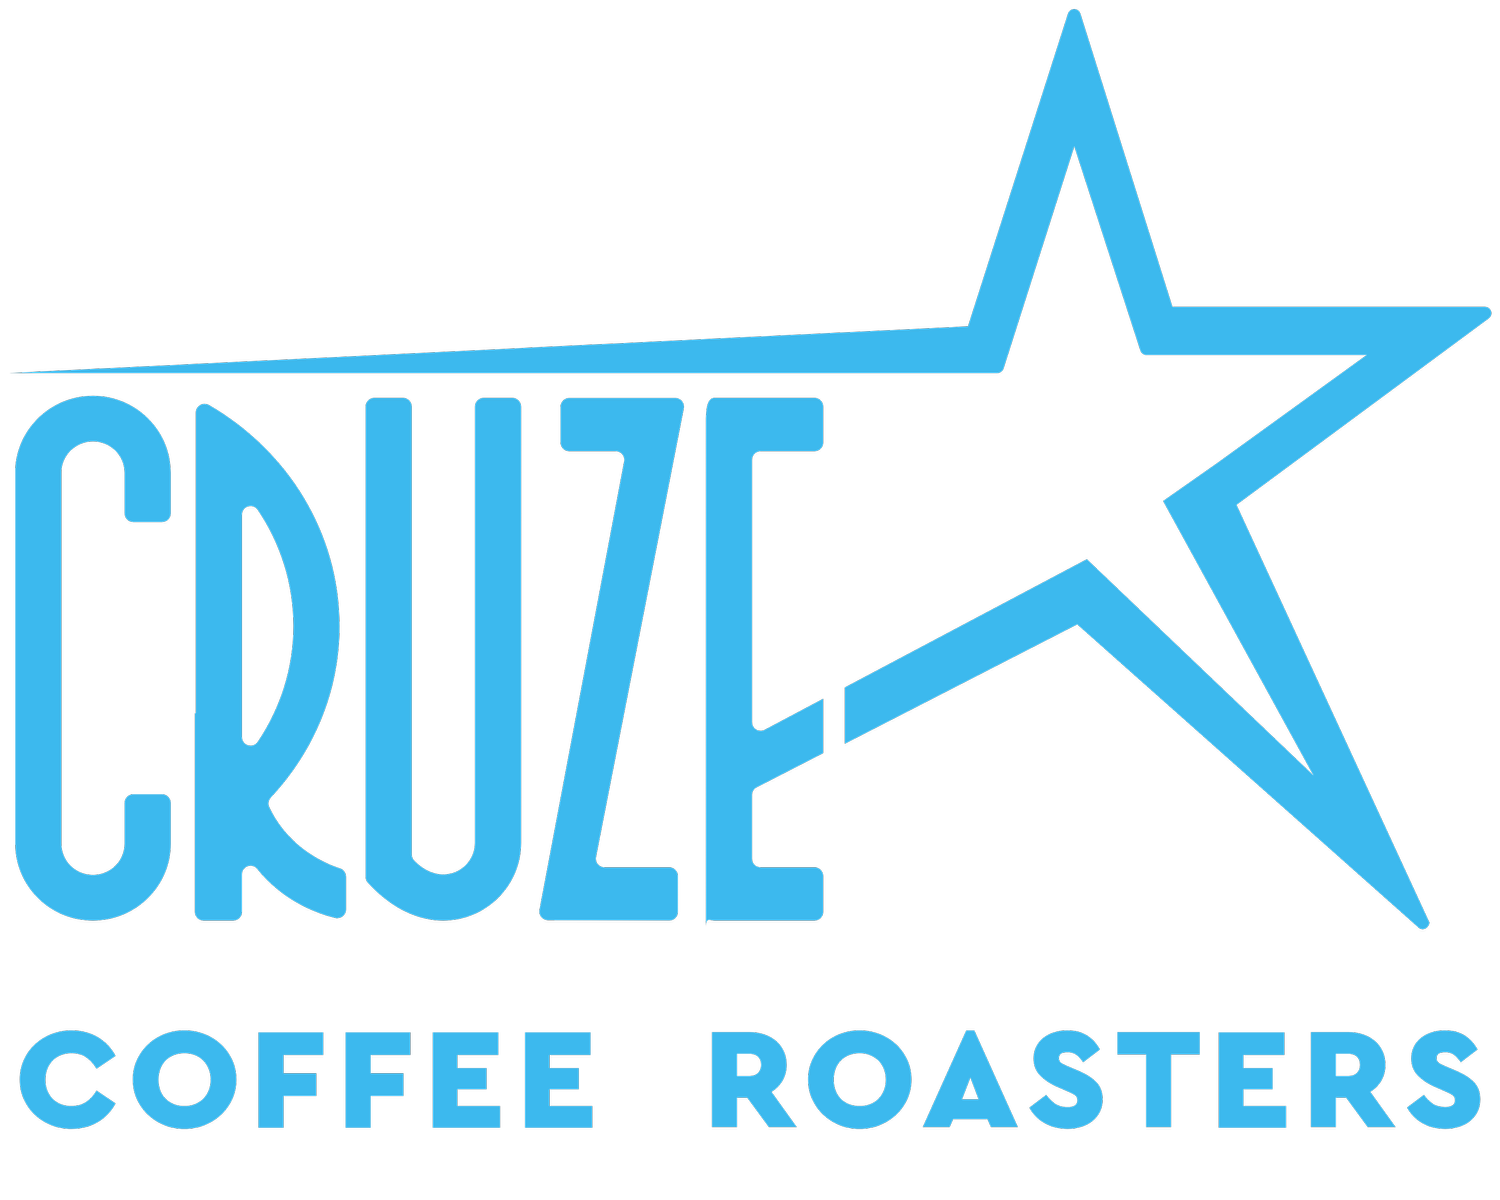 Cruze Coffee